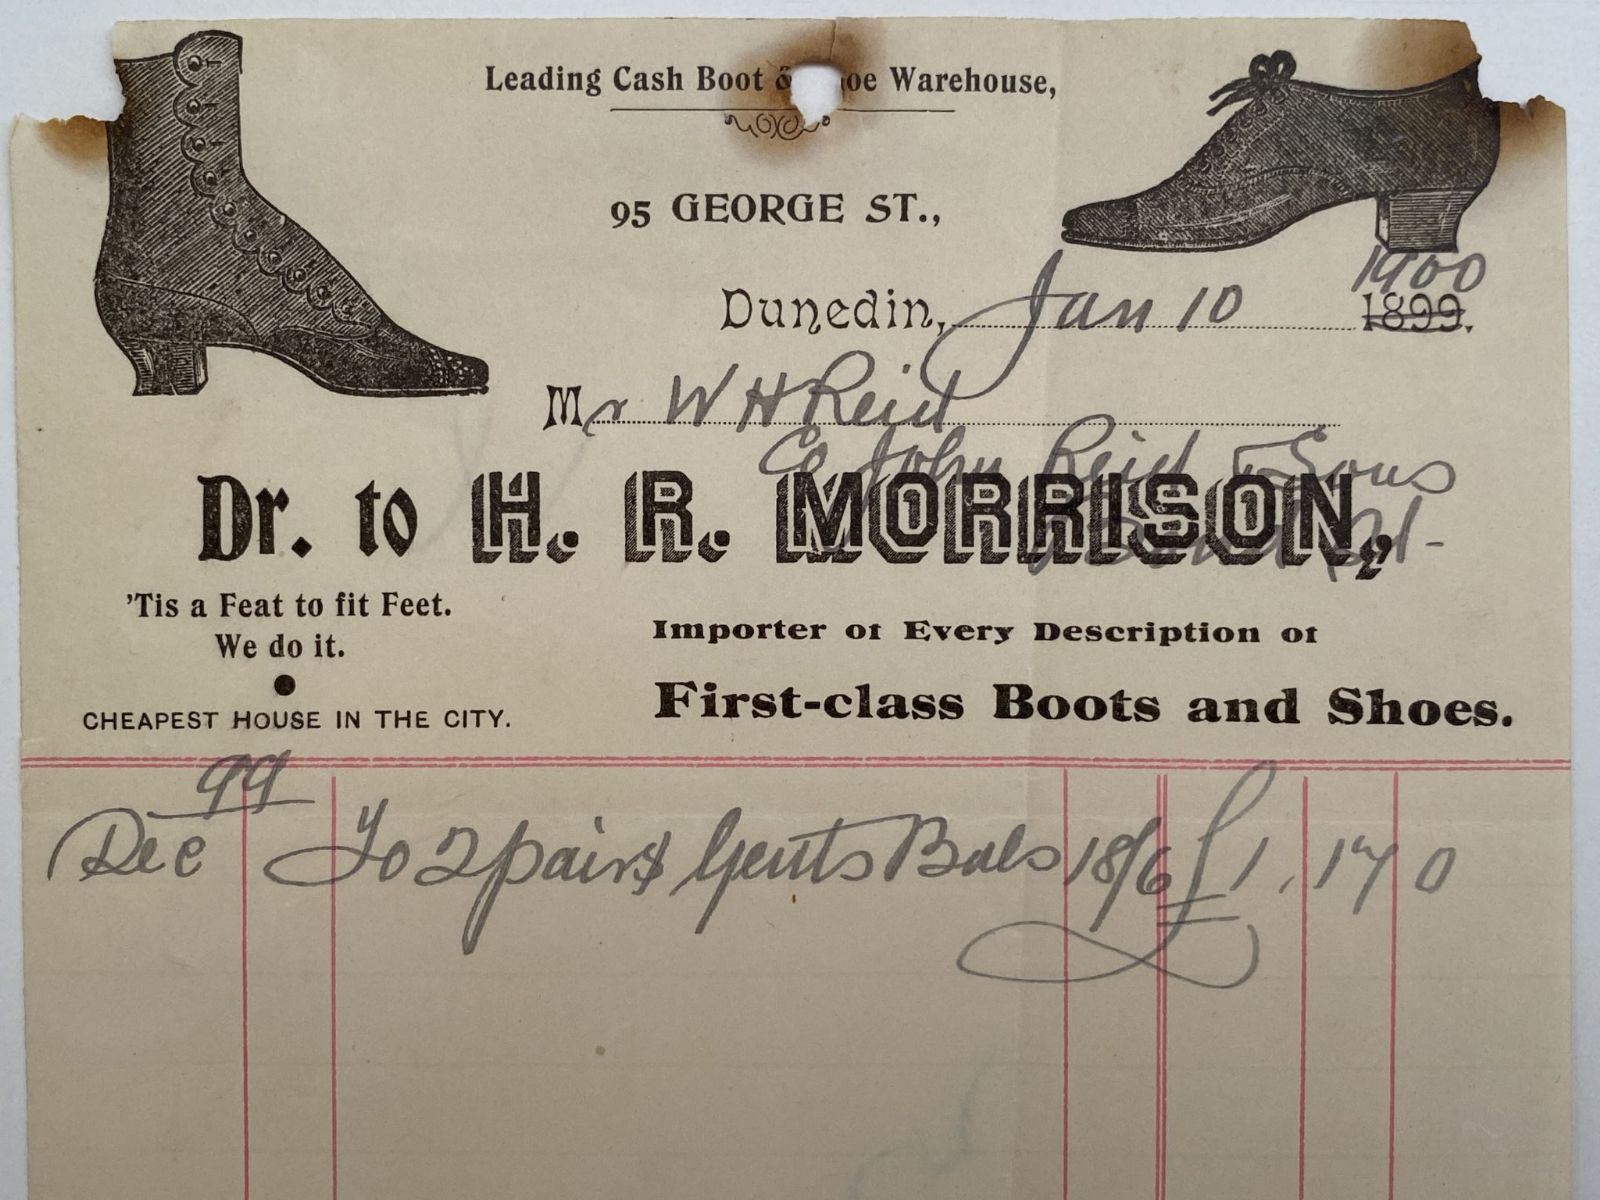 OLD INVOICE / RECEIPT: from H. Morrison - Shoemaker, Dunedin 1900 (122yo)